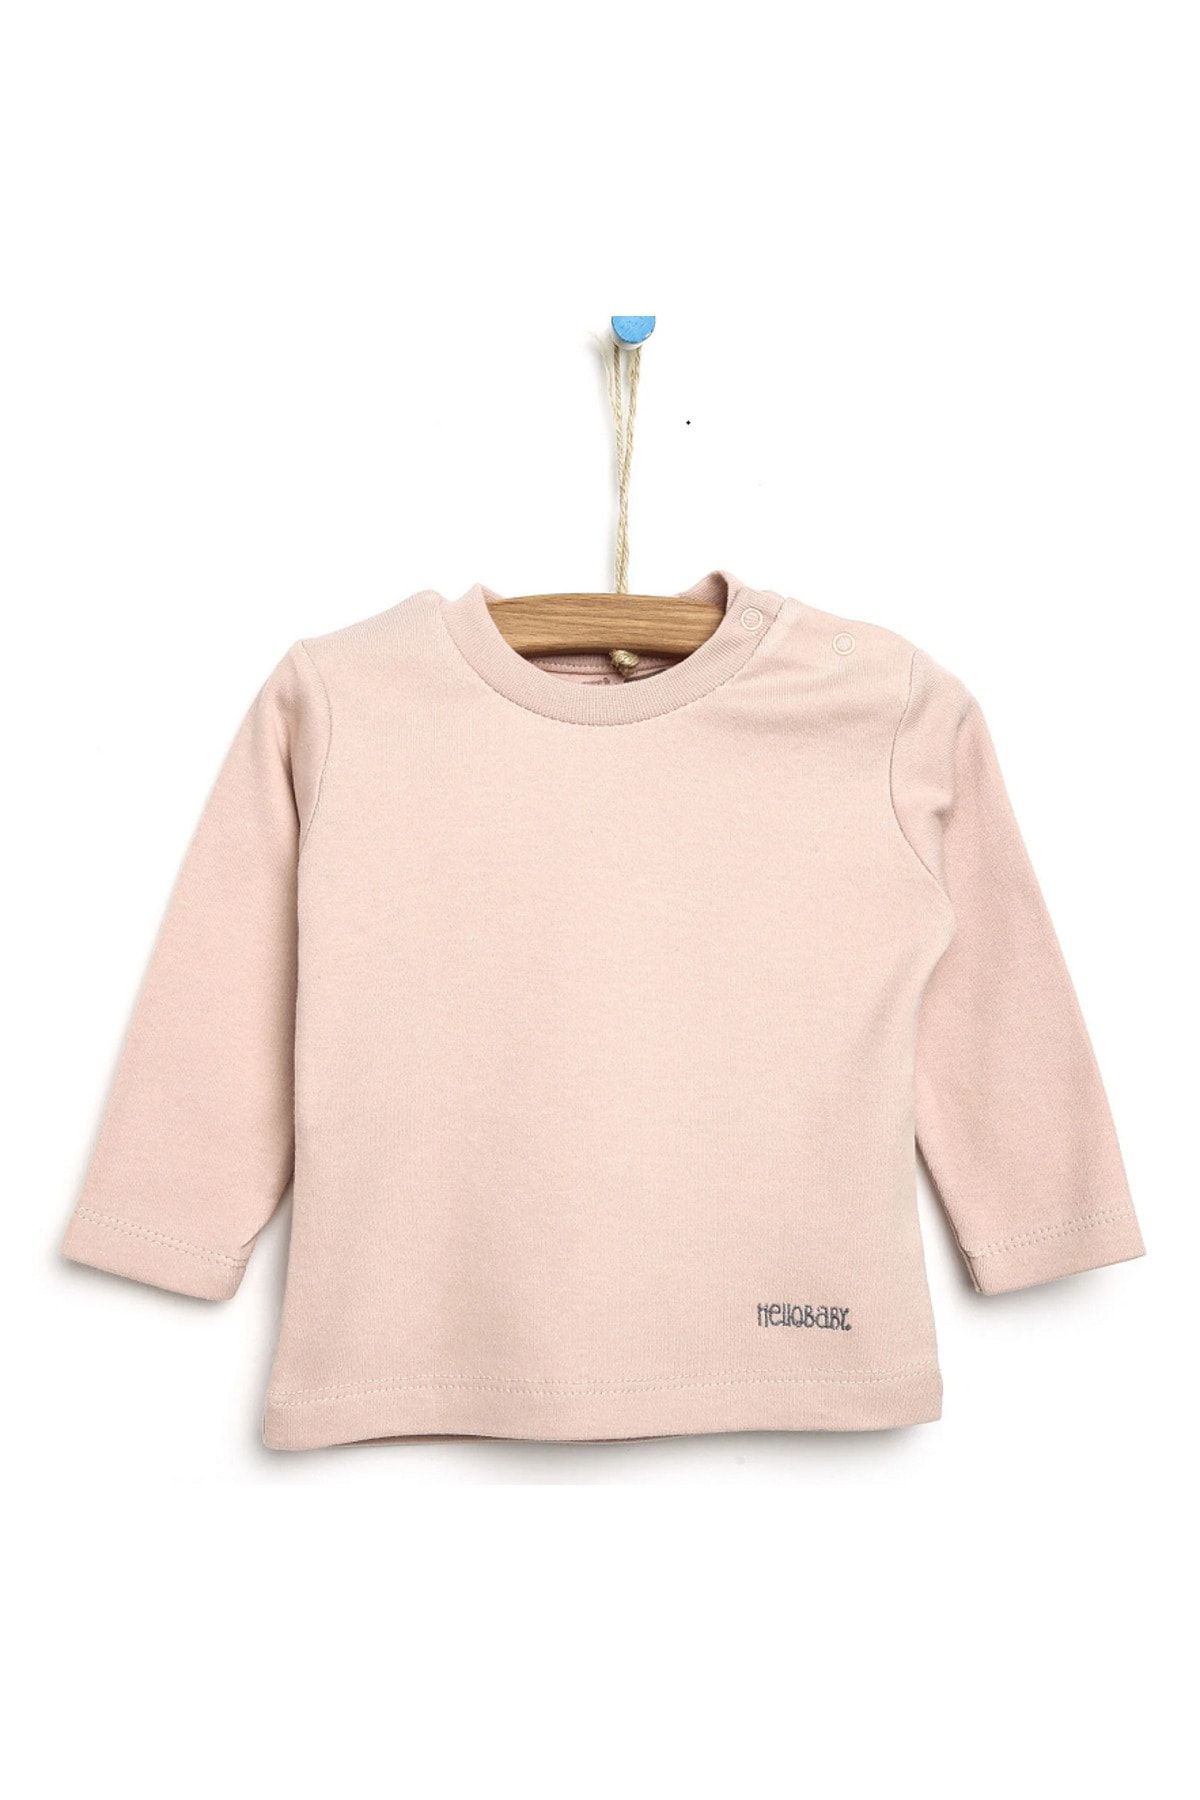 HelloBaby Basic Kız Bebek İnterlok Sweatshirt